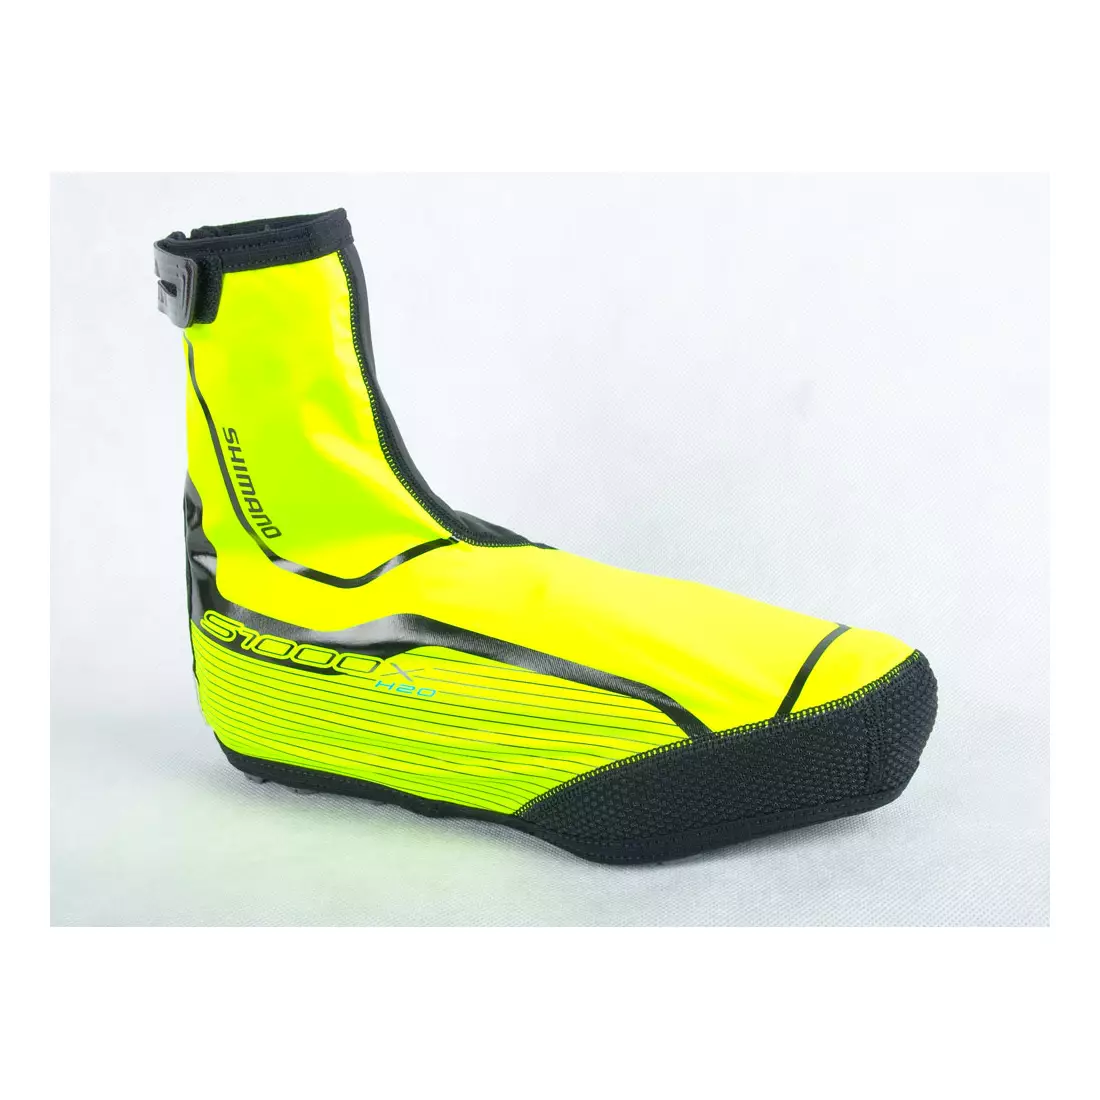 SHIMANO TRAIL H2O waterproof MTB shoe covers CW-FABW-MS42UF